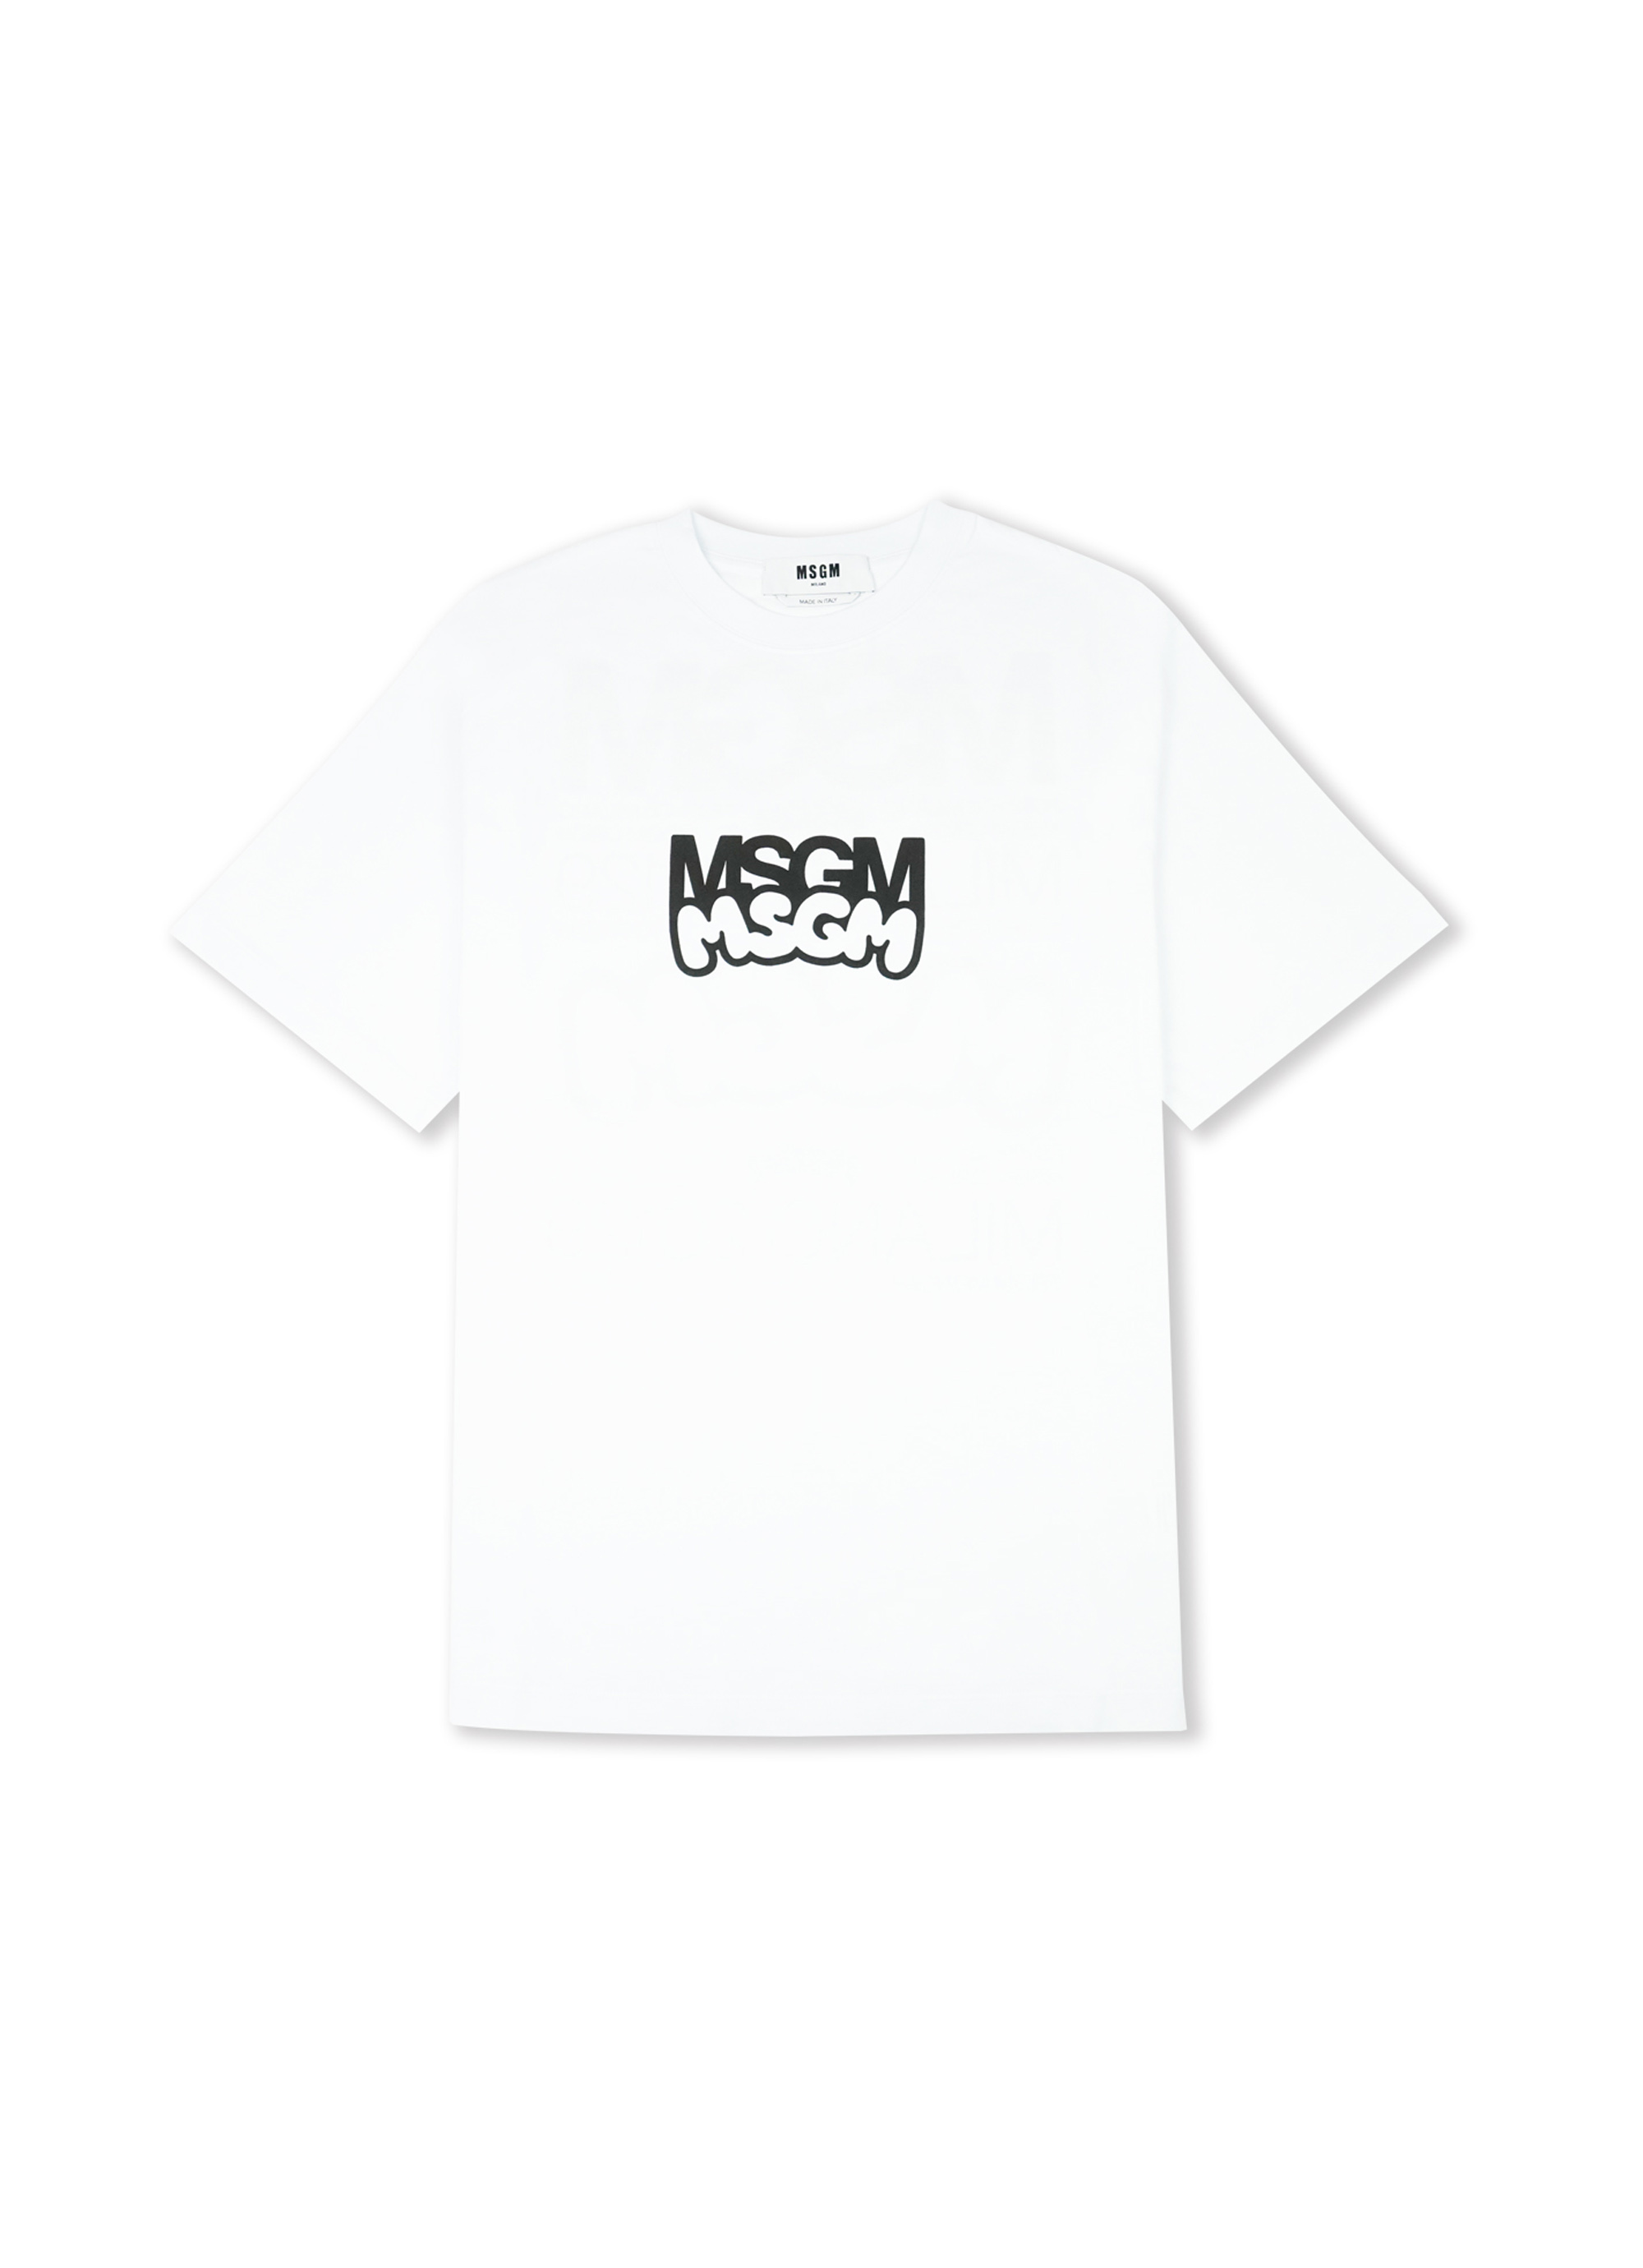 MSGM×Burro Studio コラボレーション グラフィック Tシャツ 詳細画像 ホワイト 1